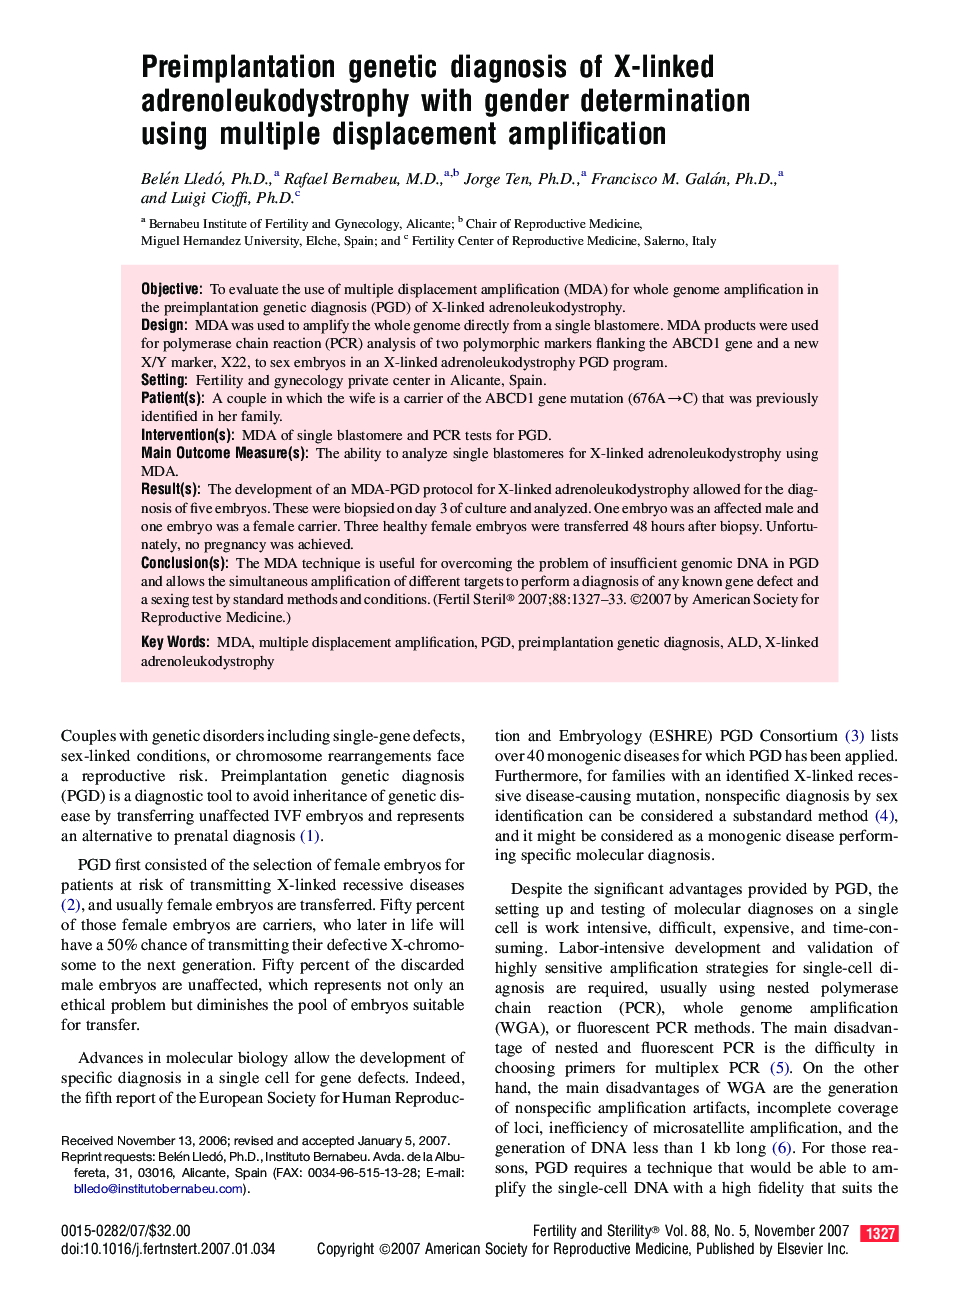 Preimplantation genetic diagnosis of X-linked adrenoleukodystrophy with gender determination using multiple displacement amplification